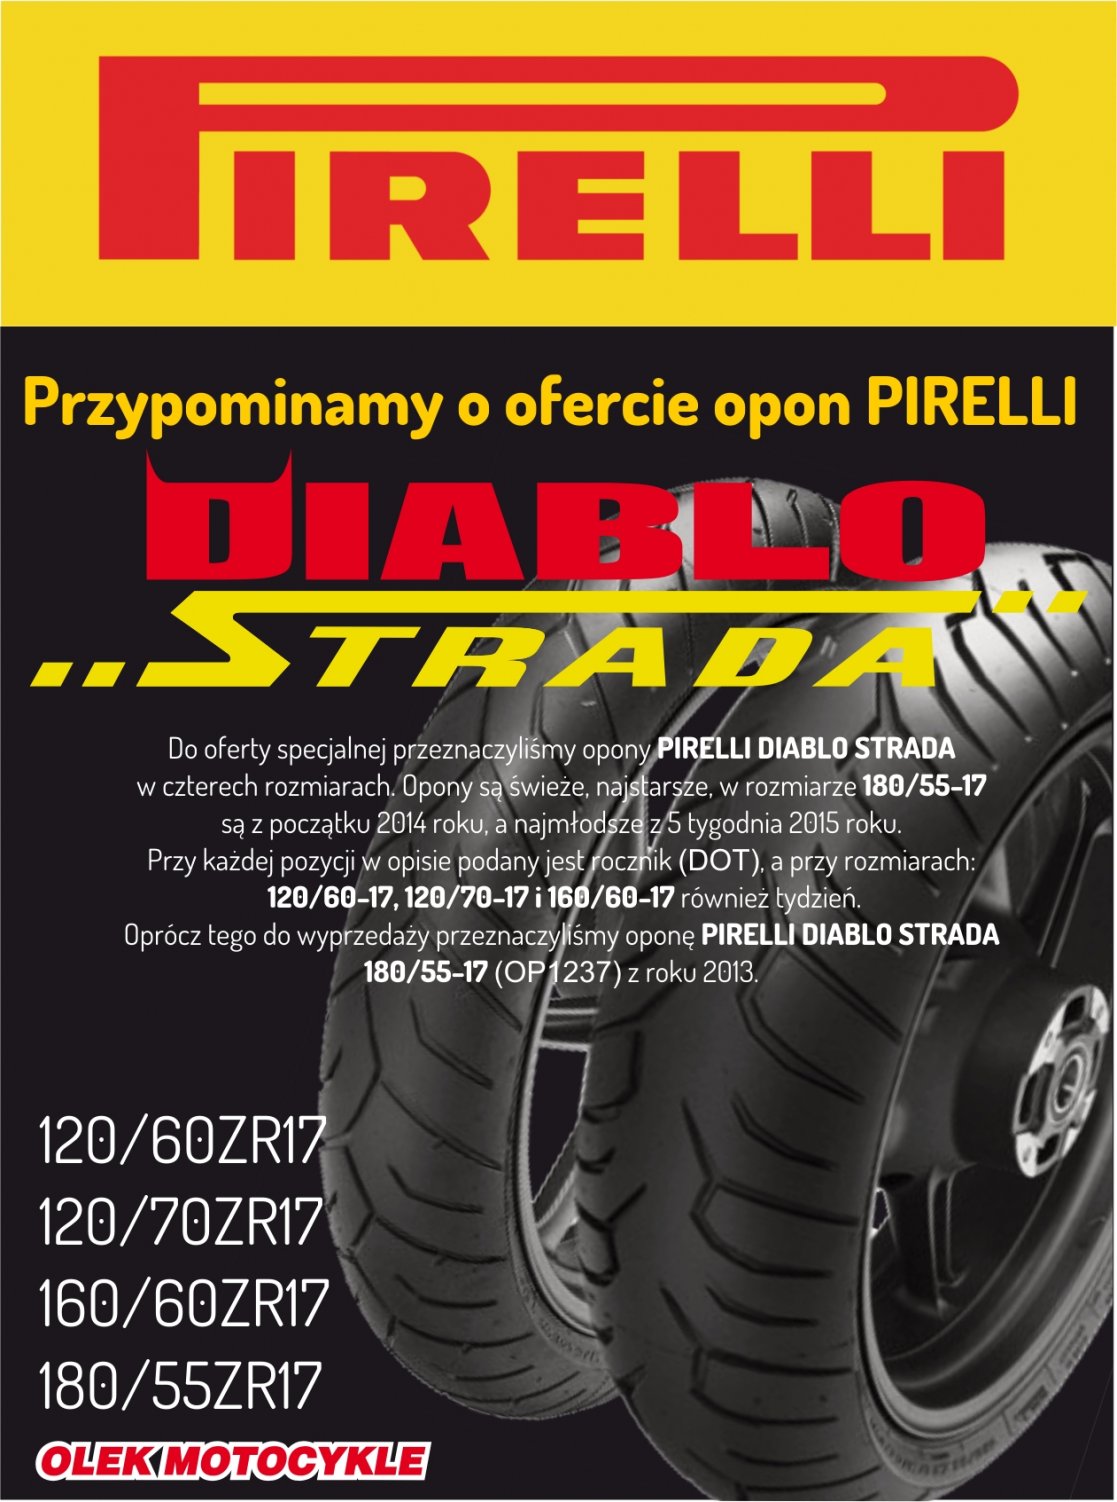 Pirelli Diablo Strada